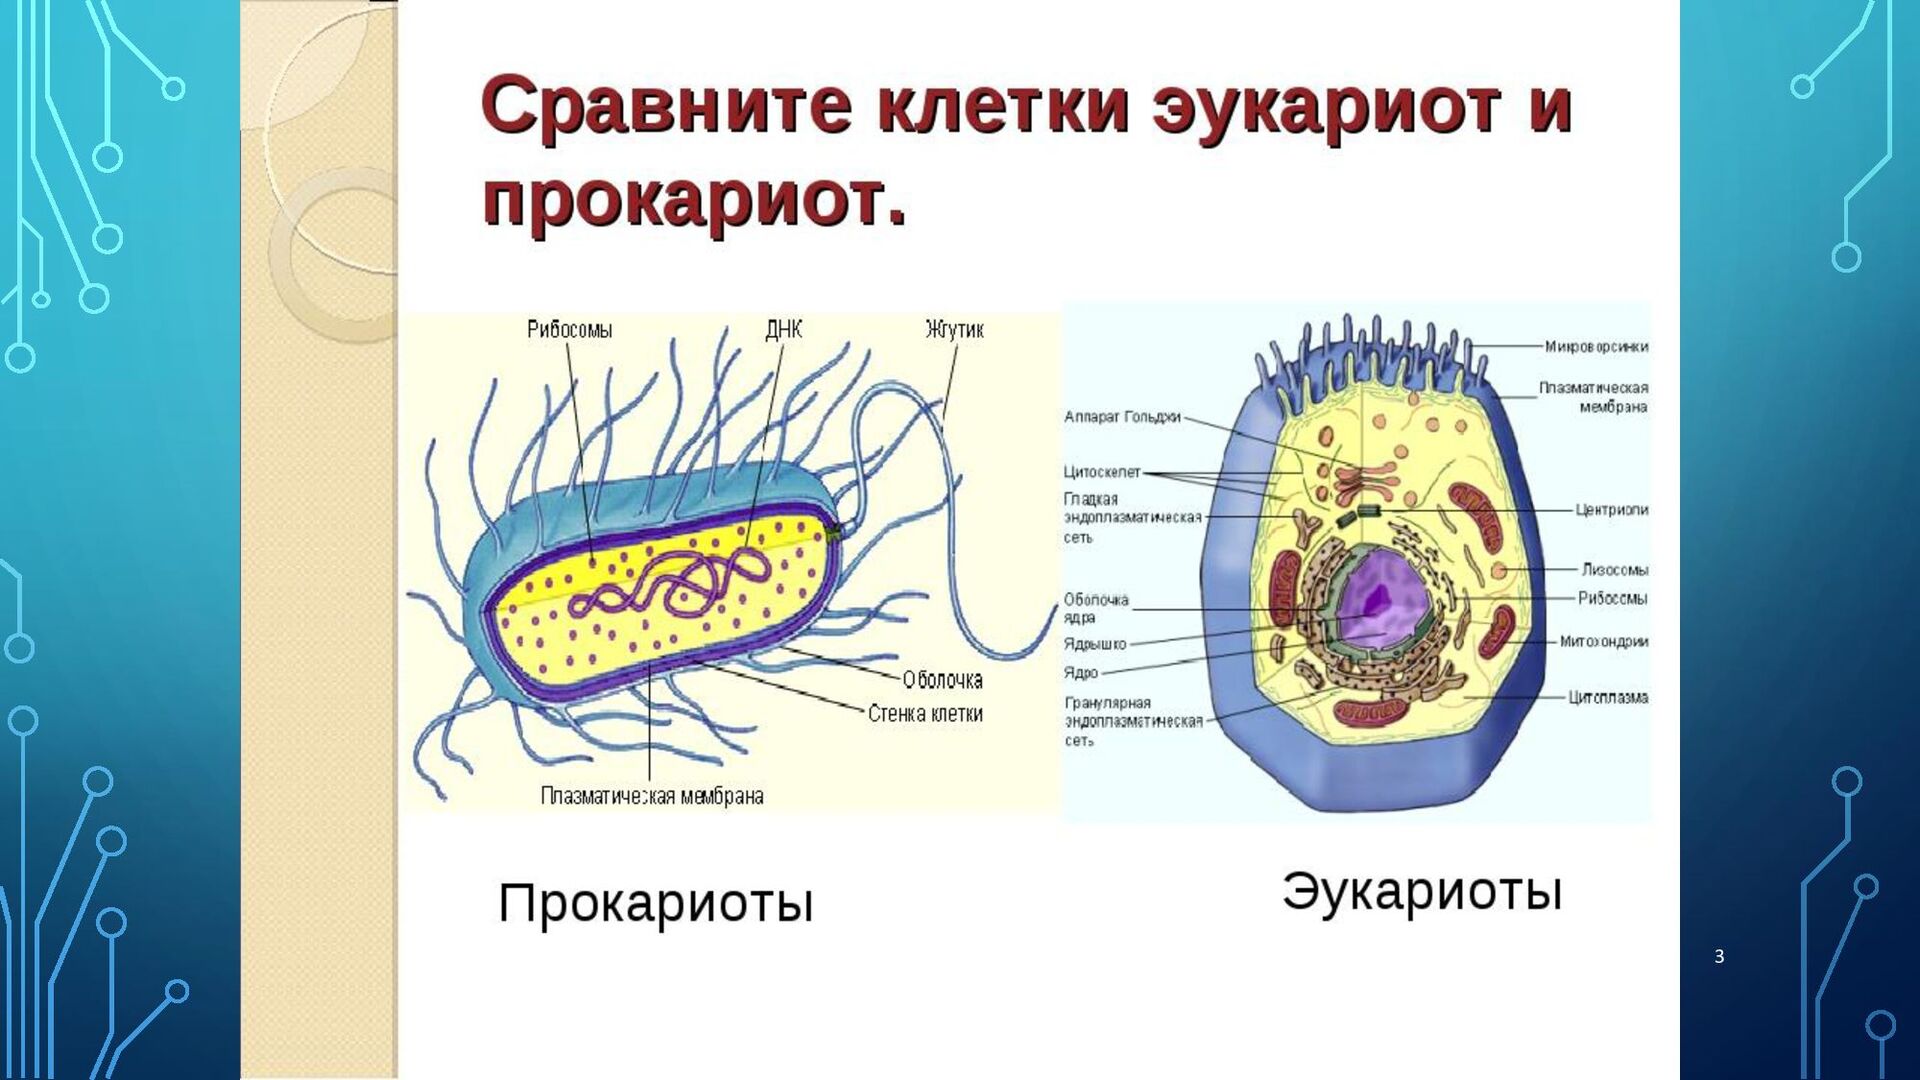 Группы организмов прокариот. Клетки прокариот и эукариот. Строение клетки прокариот и эукариот рисунок. Строение прокариот и эукариот. Строение клетки прокариот и эукариот.